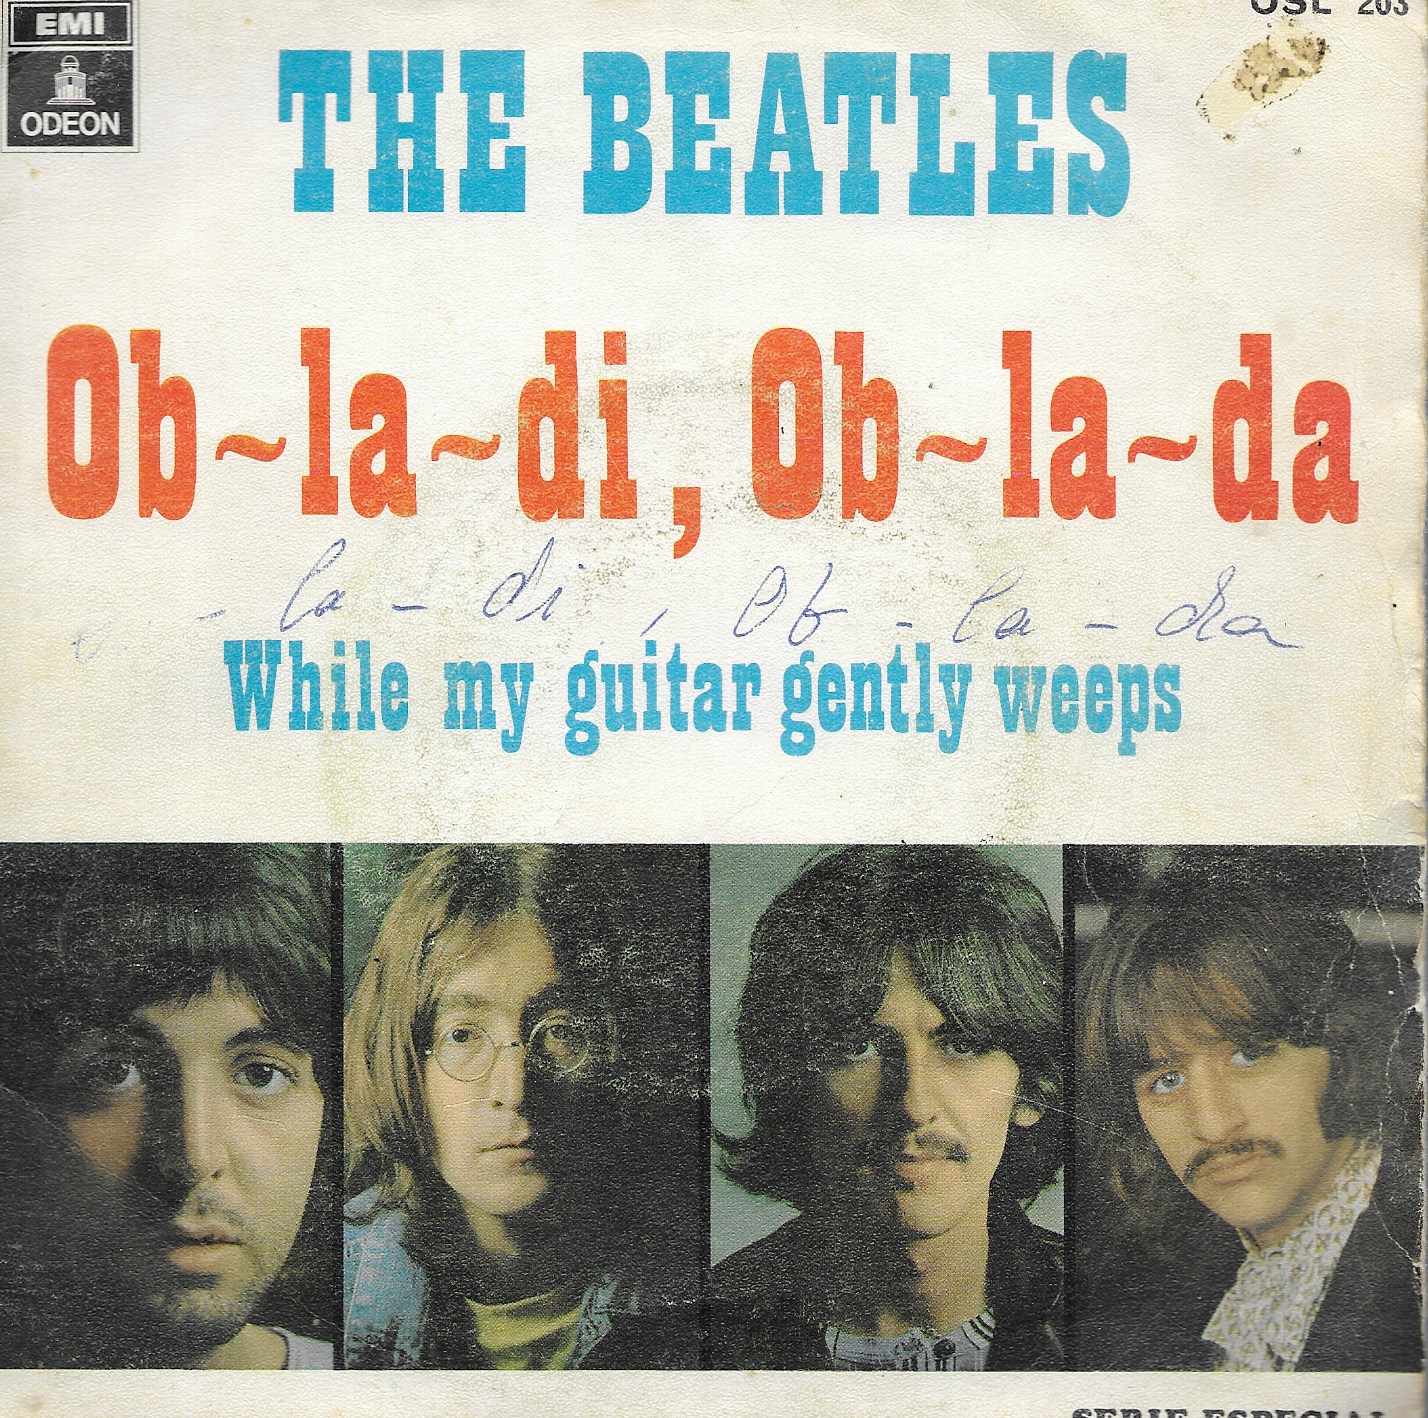 The Beatles. Odeon 1969. 45RPM SP 2 títulos: Ob - la - di, Ob - la - da/While my guitar gently weeps